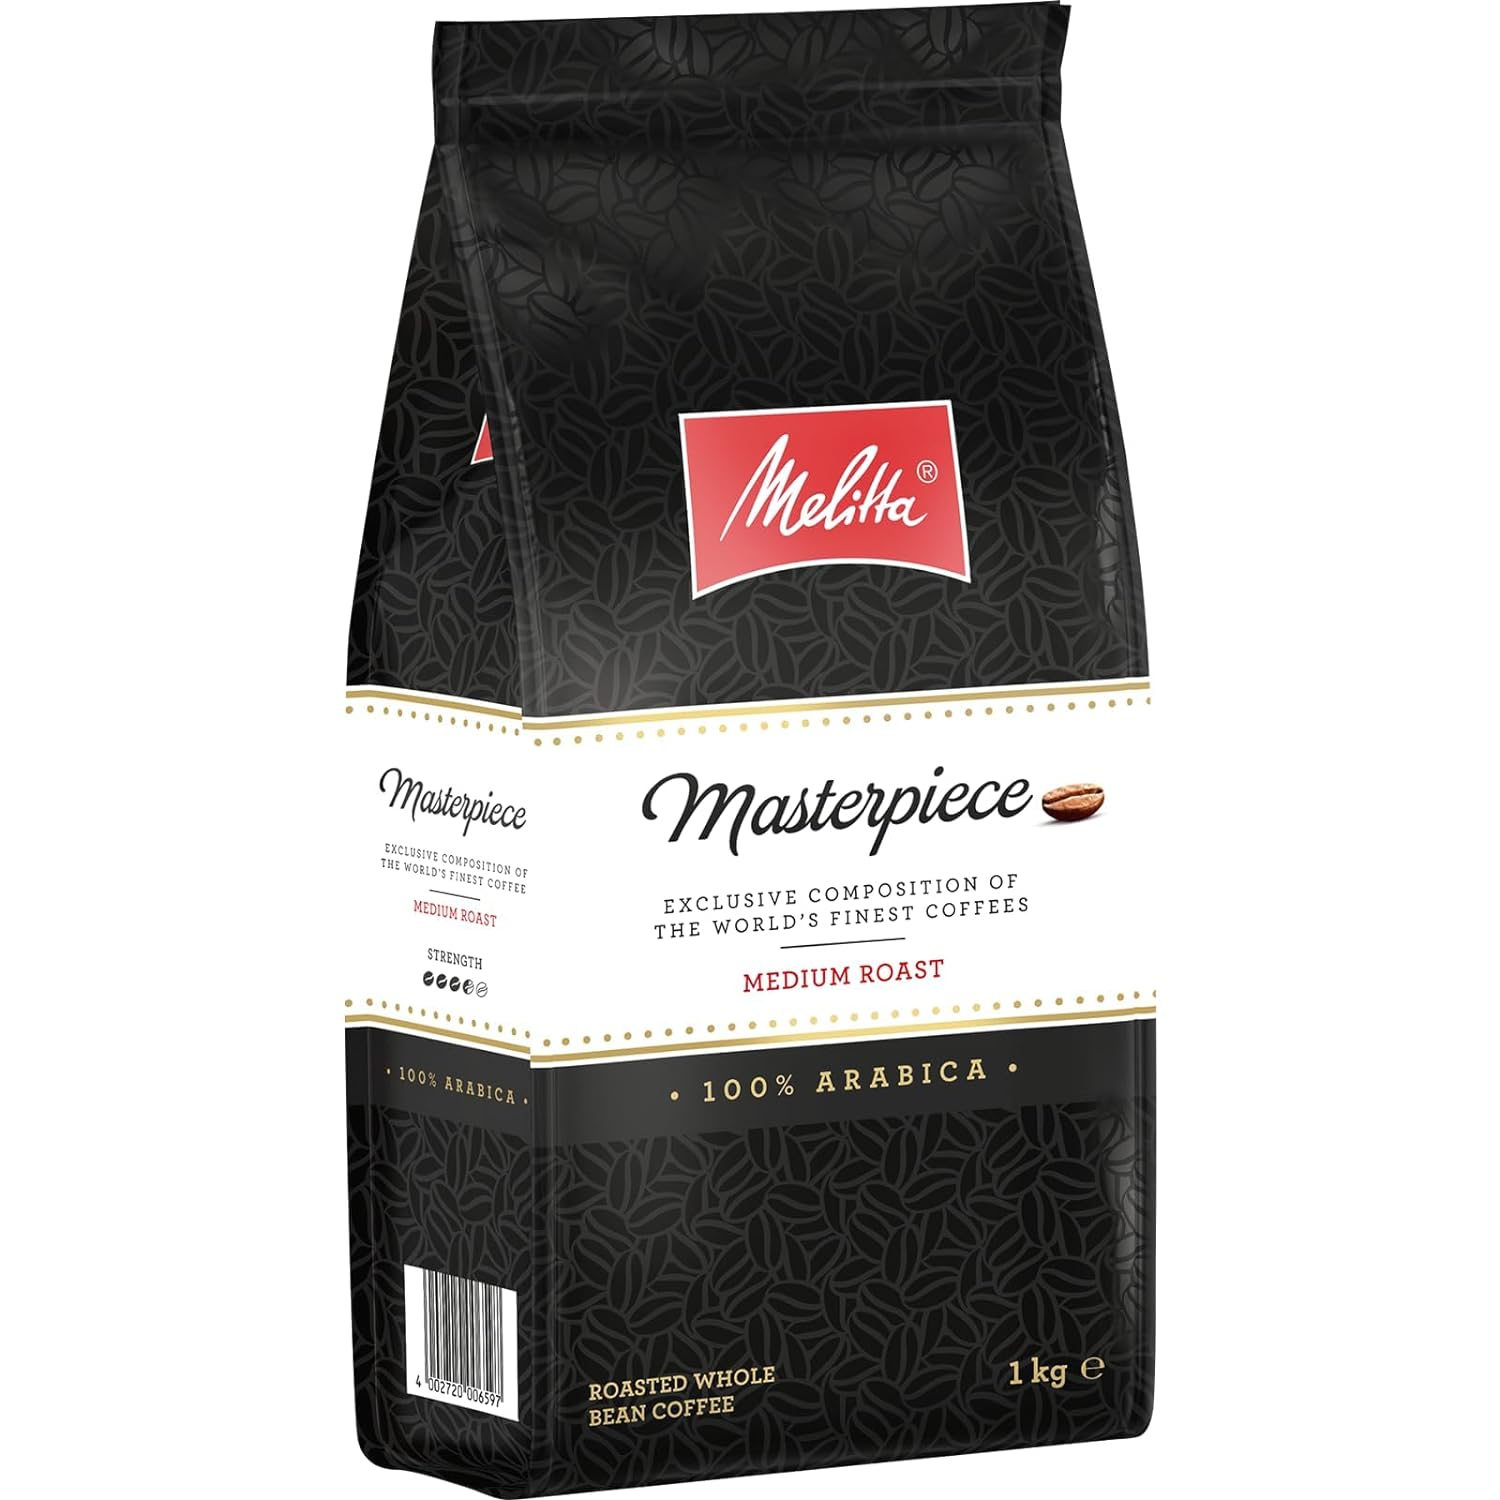 Melitta Masterpiece Rare Coffee, 1 kg, Whole Coffee Beans, Unground, 100% Arabica, Medium Roast, Roasted in Germany, Strength 3.5